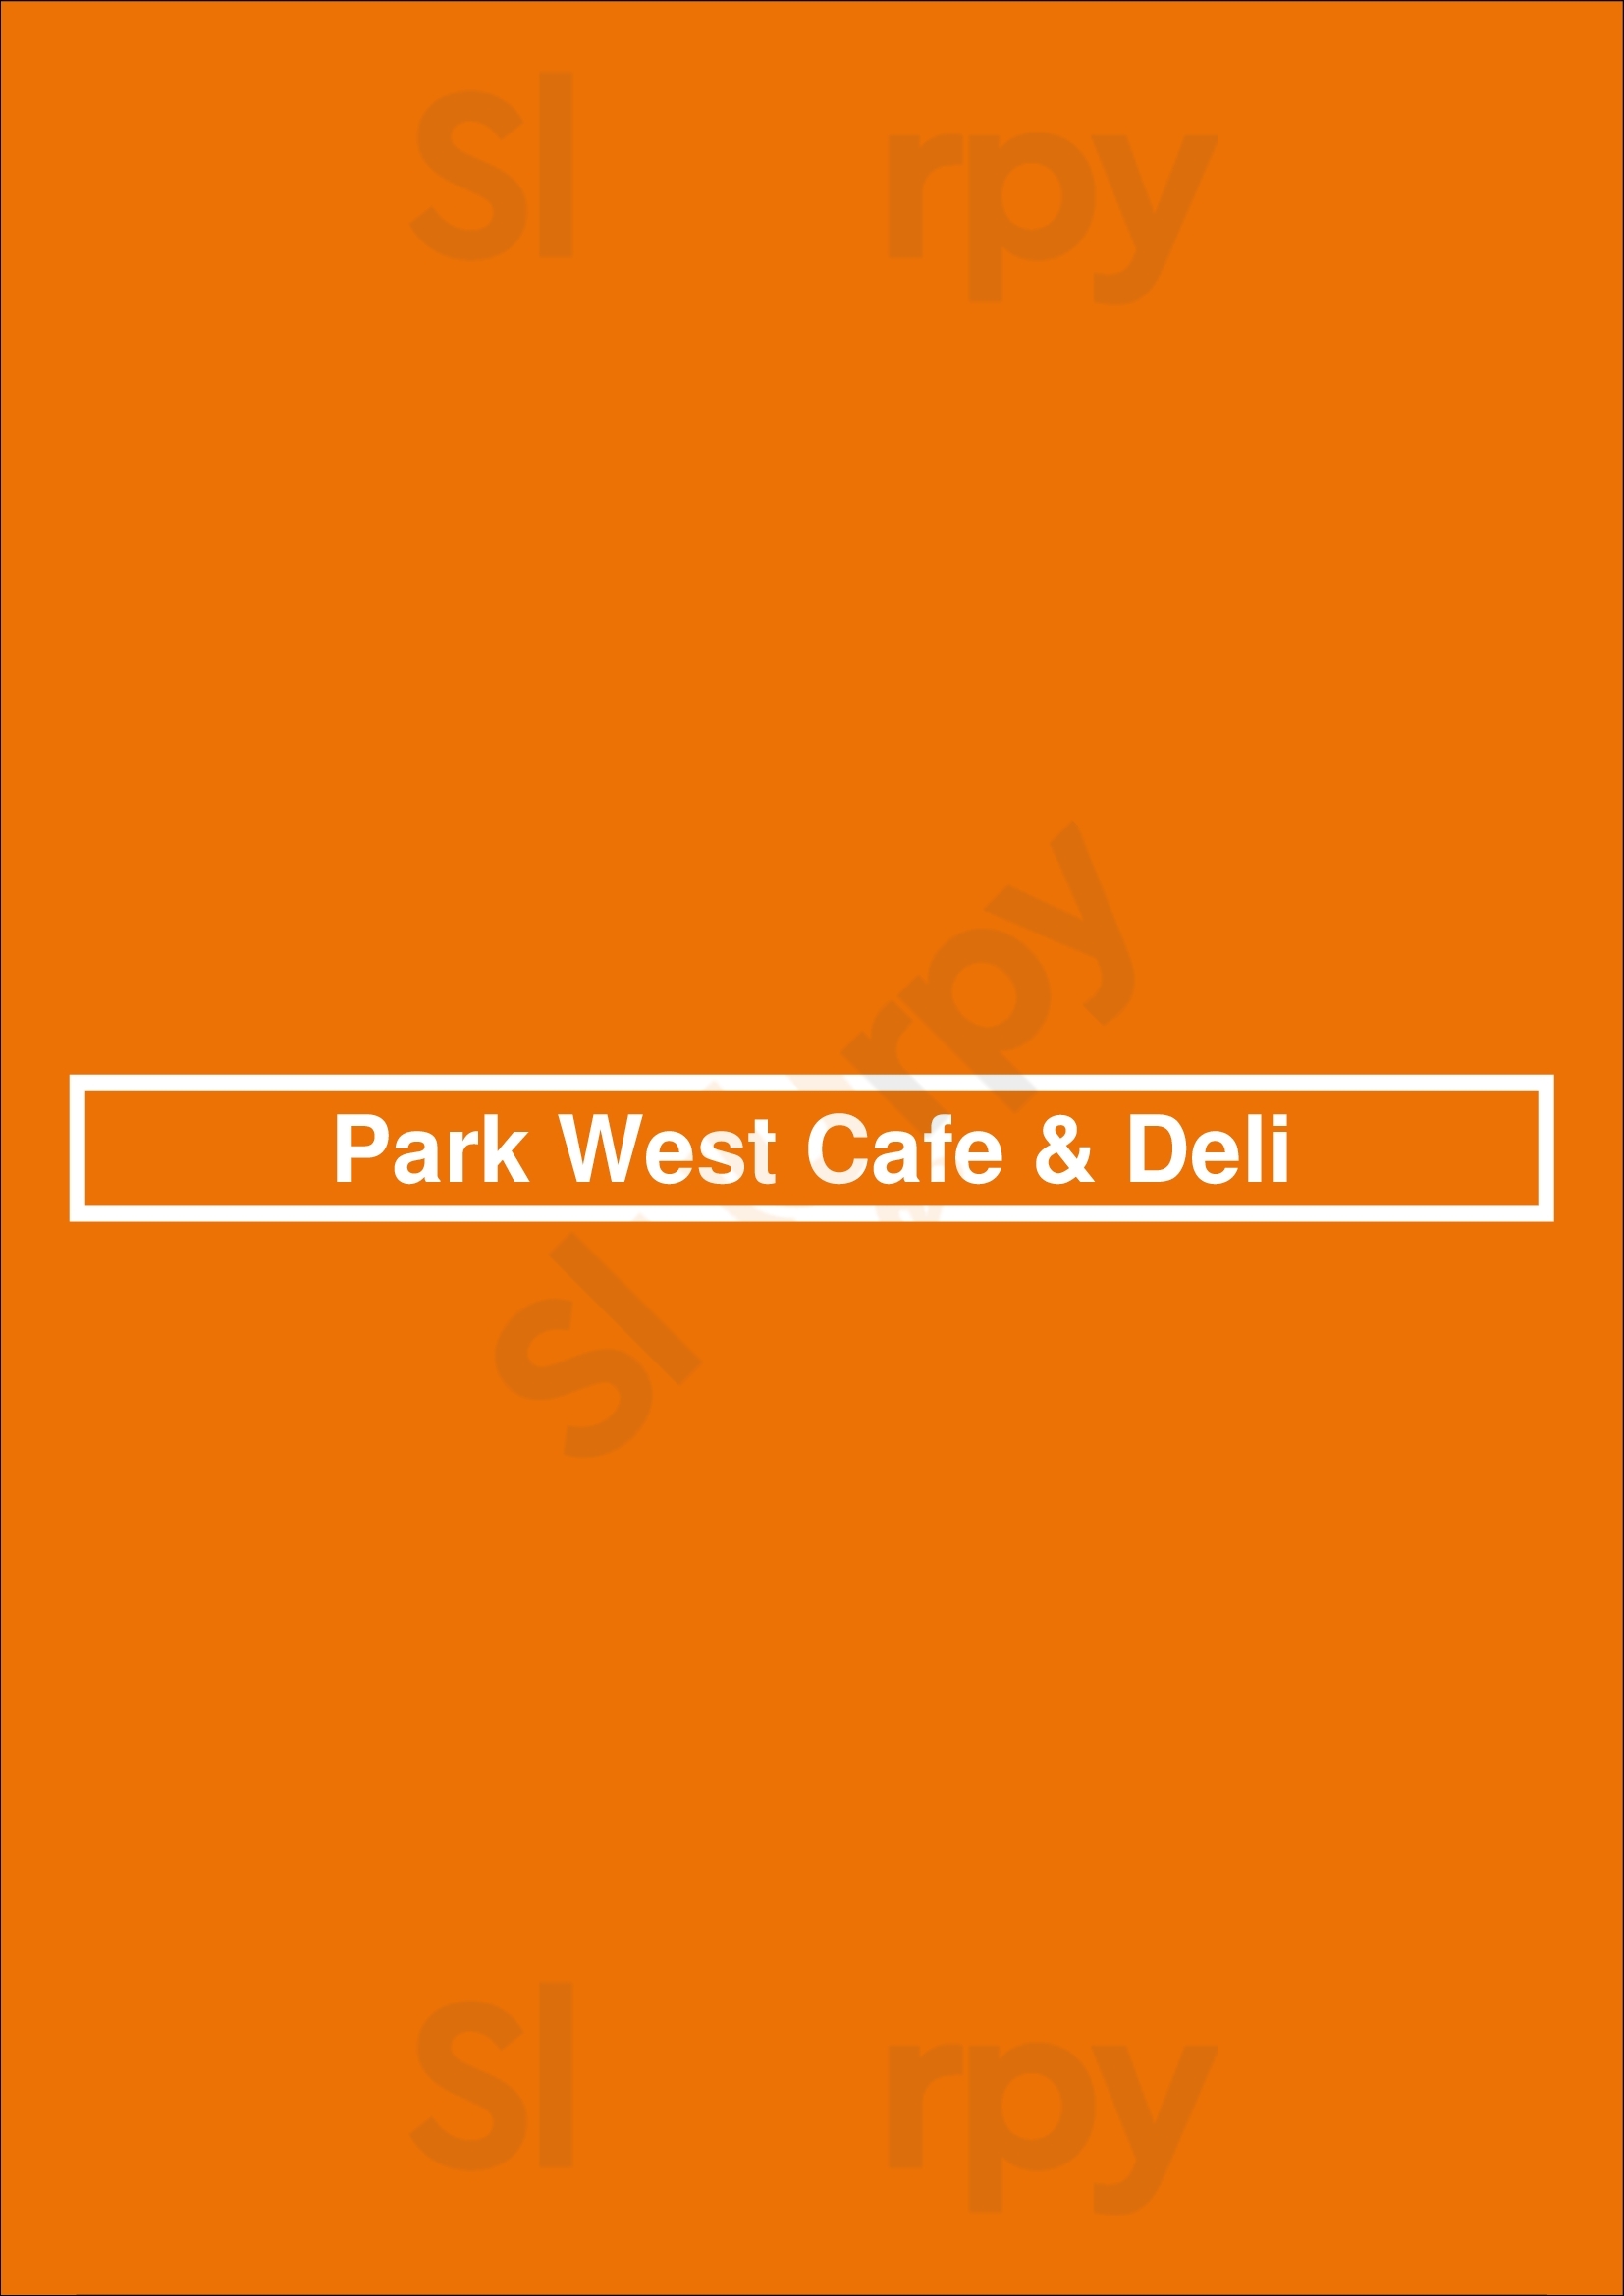 Park West Cafe & Deli New York City Menu - 1